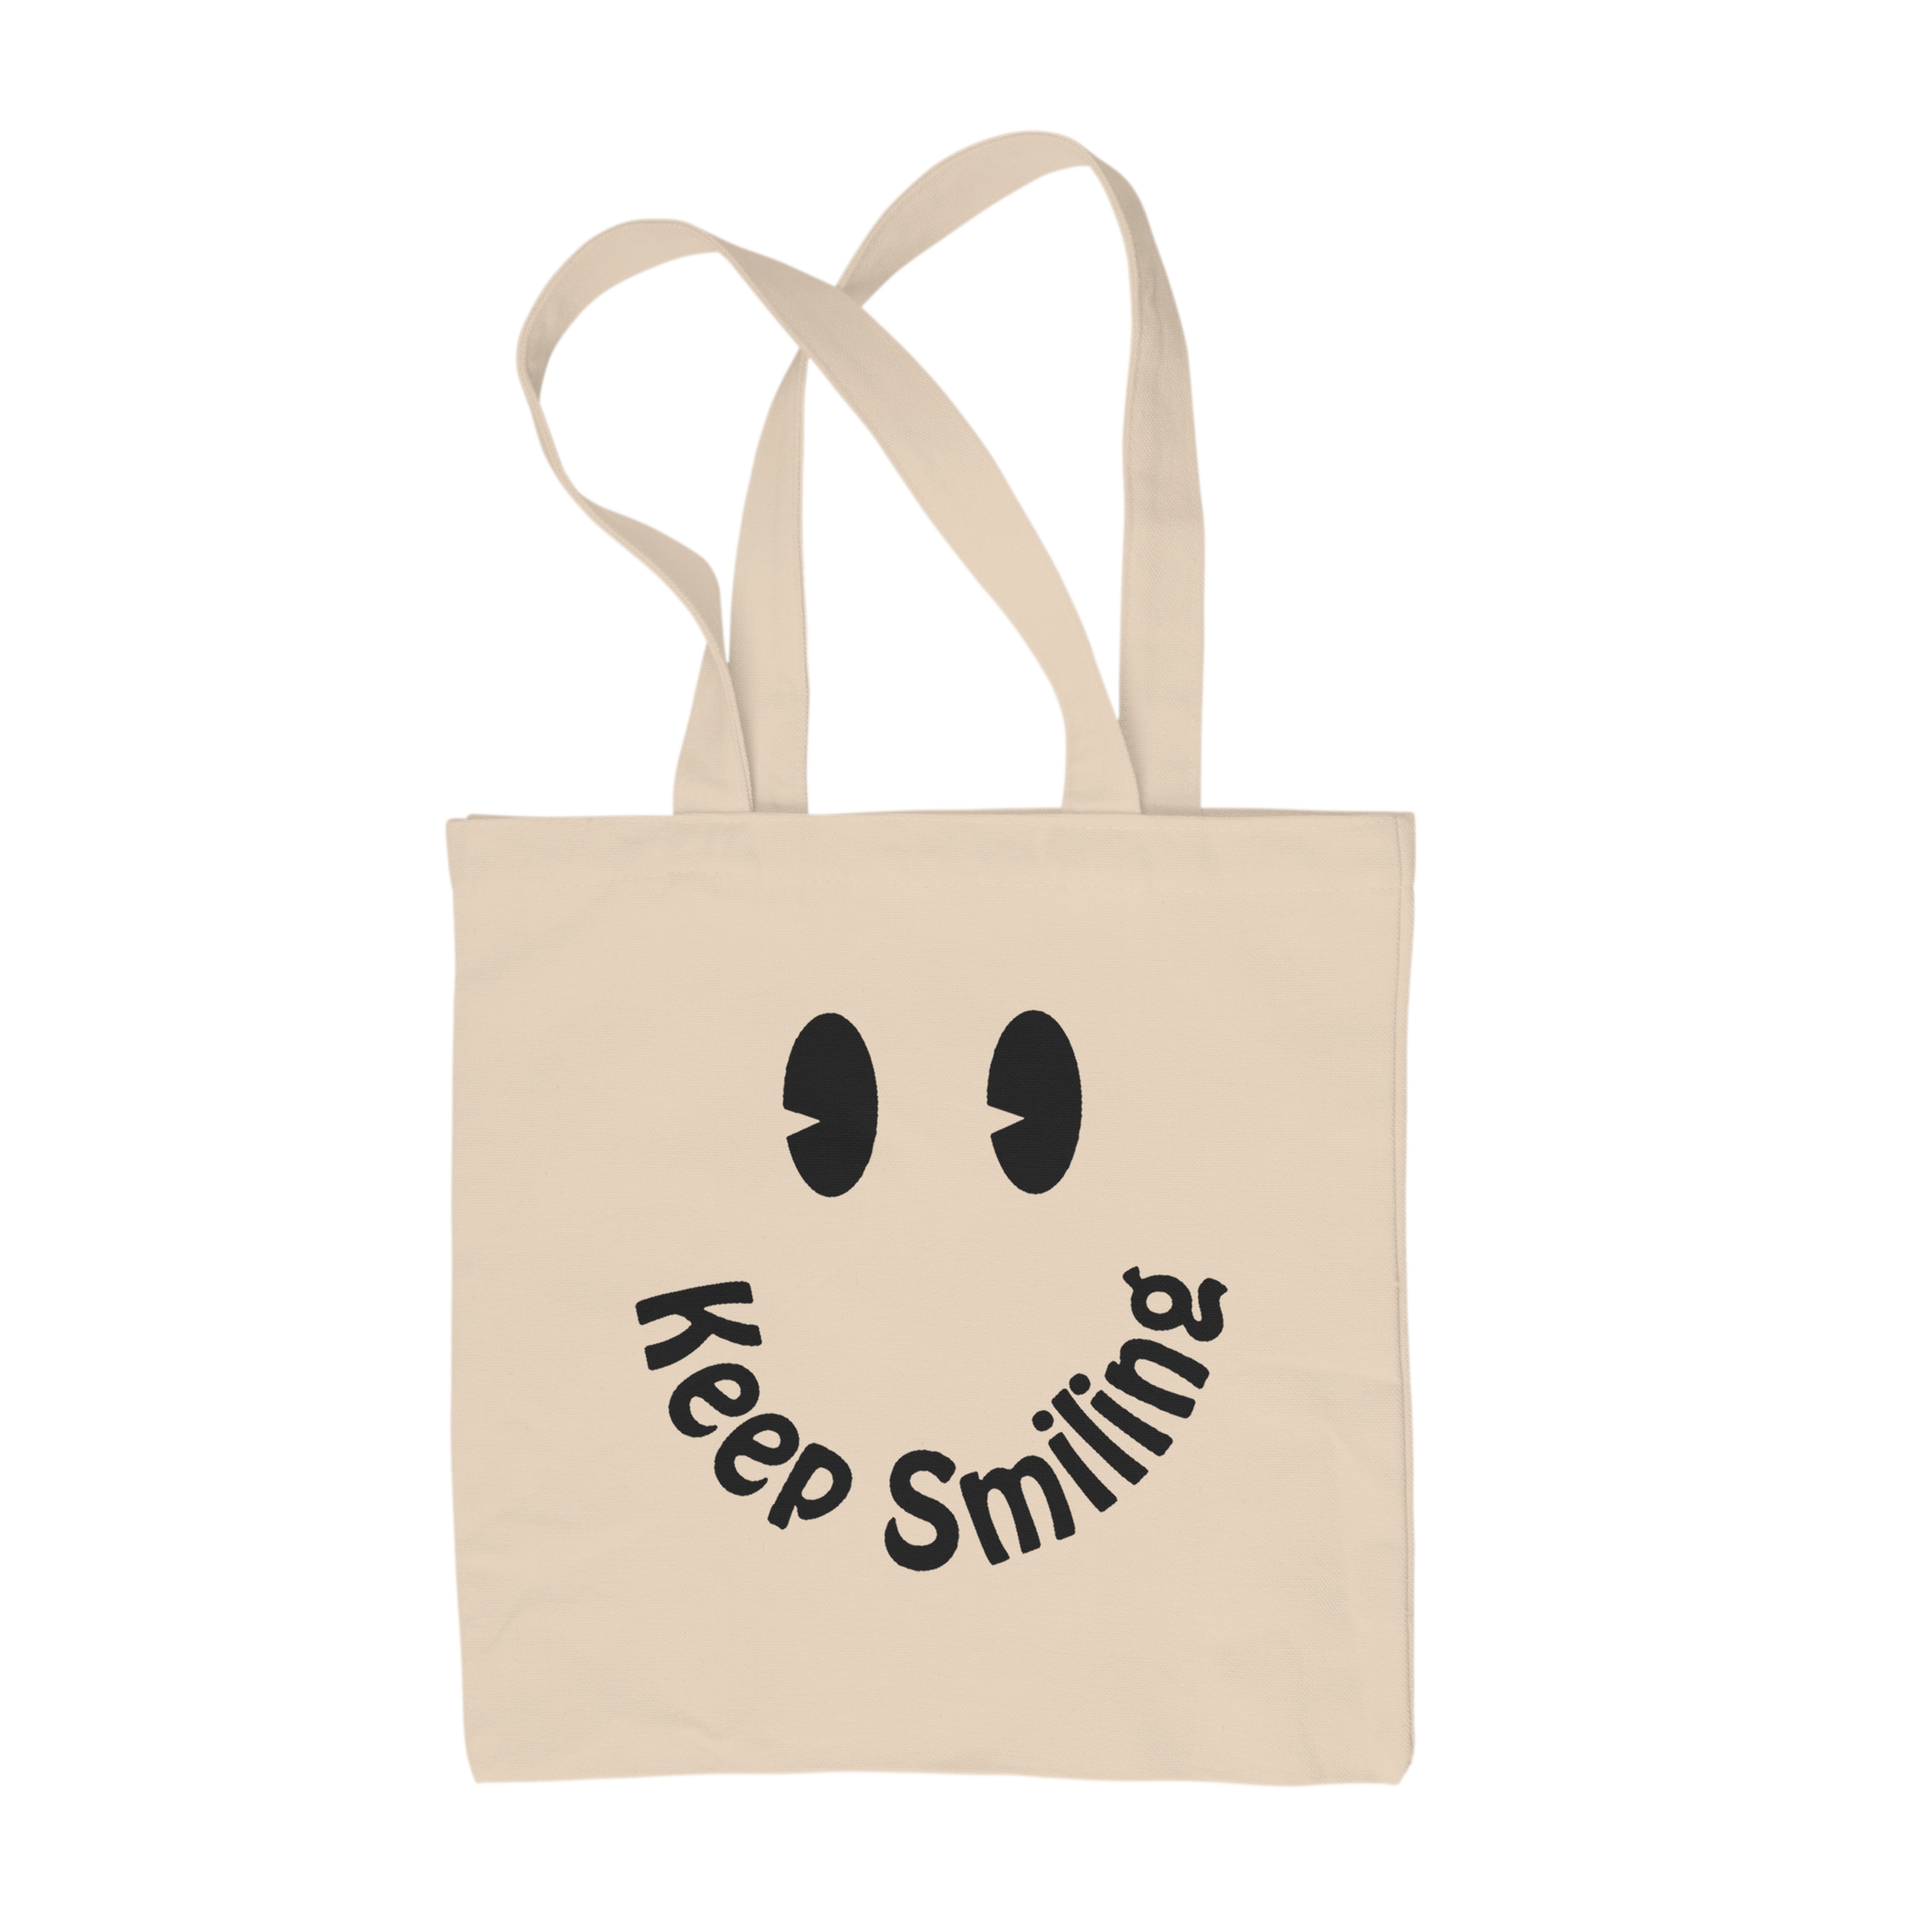 Keep Smiling - Tote Bag